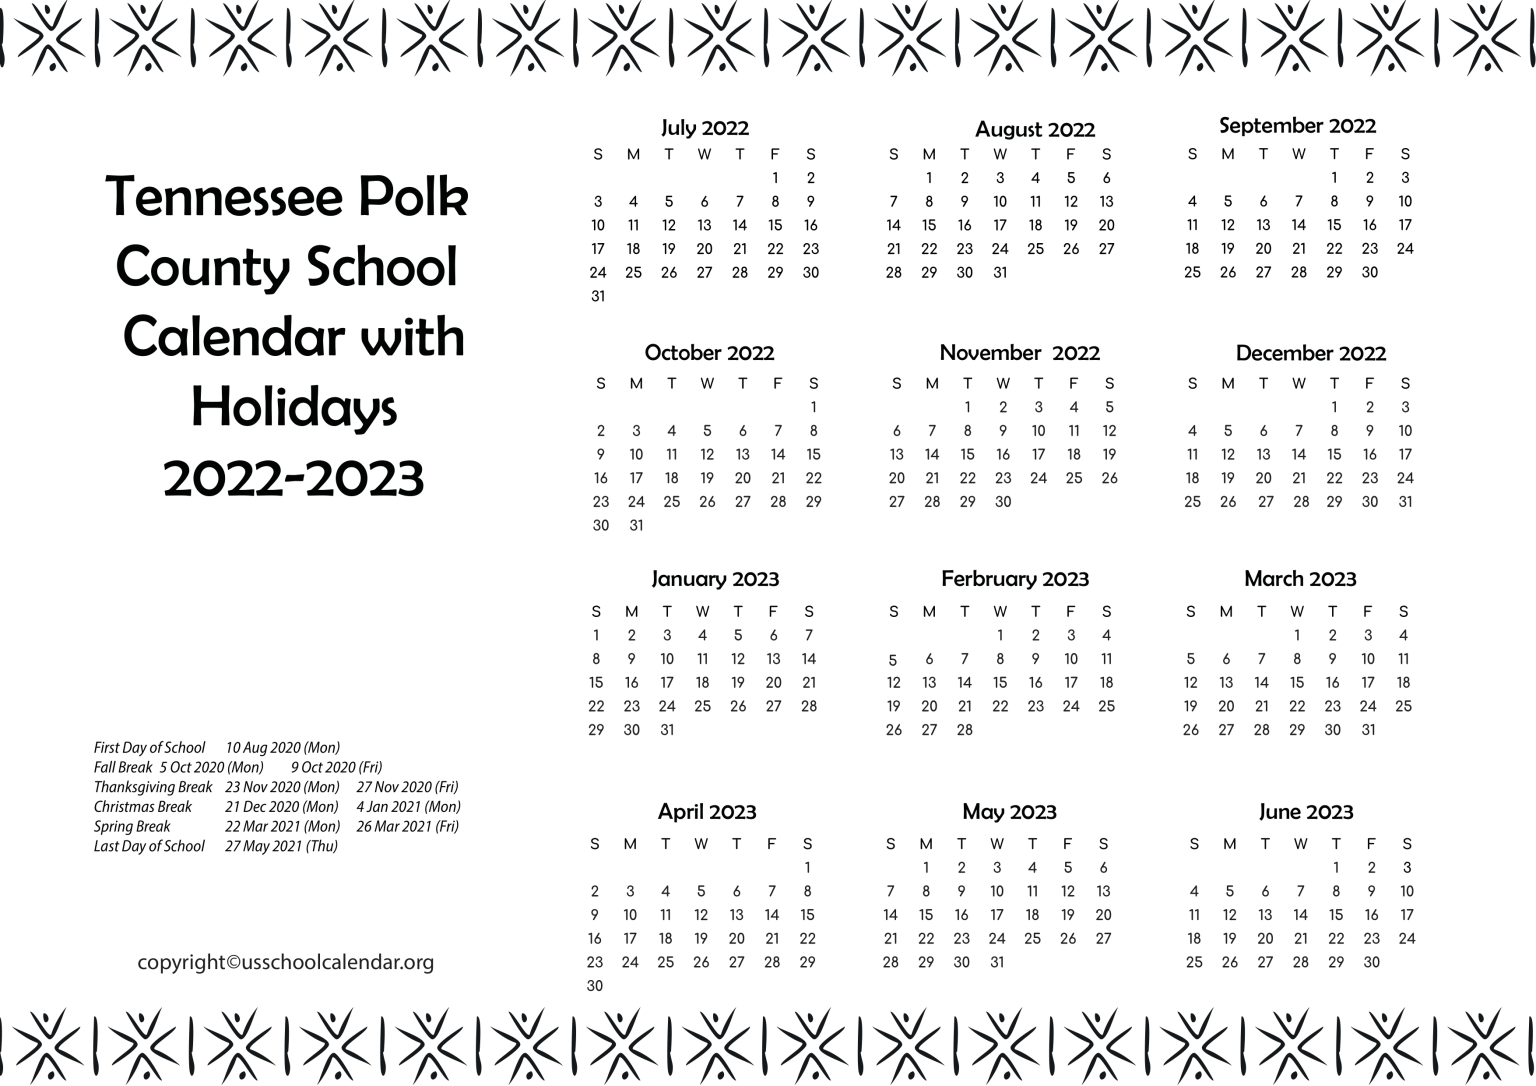 polk-county-school-calendar-2022-2023-us-school-calendar